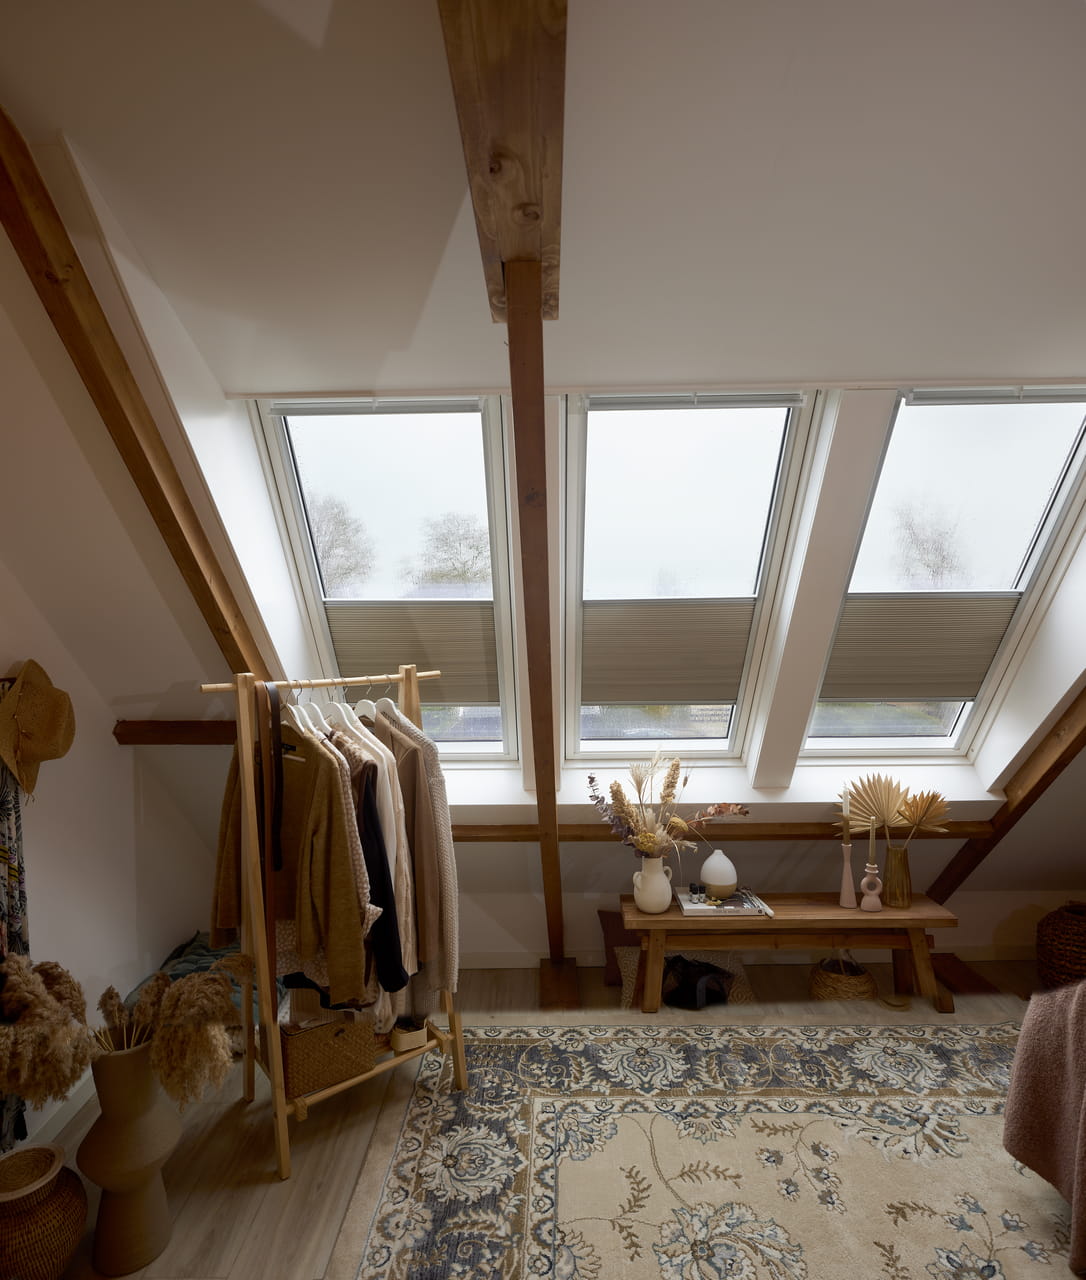 Zolder slaapkamer met houten balken en VELUX dakvenster, ingericht met kledingrek en bankje.